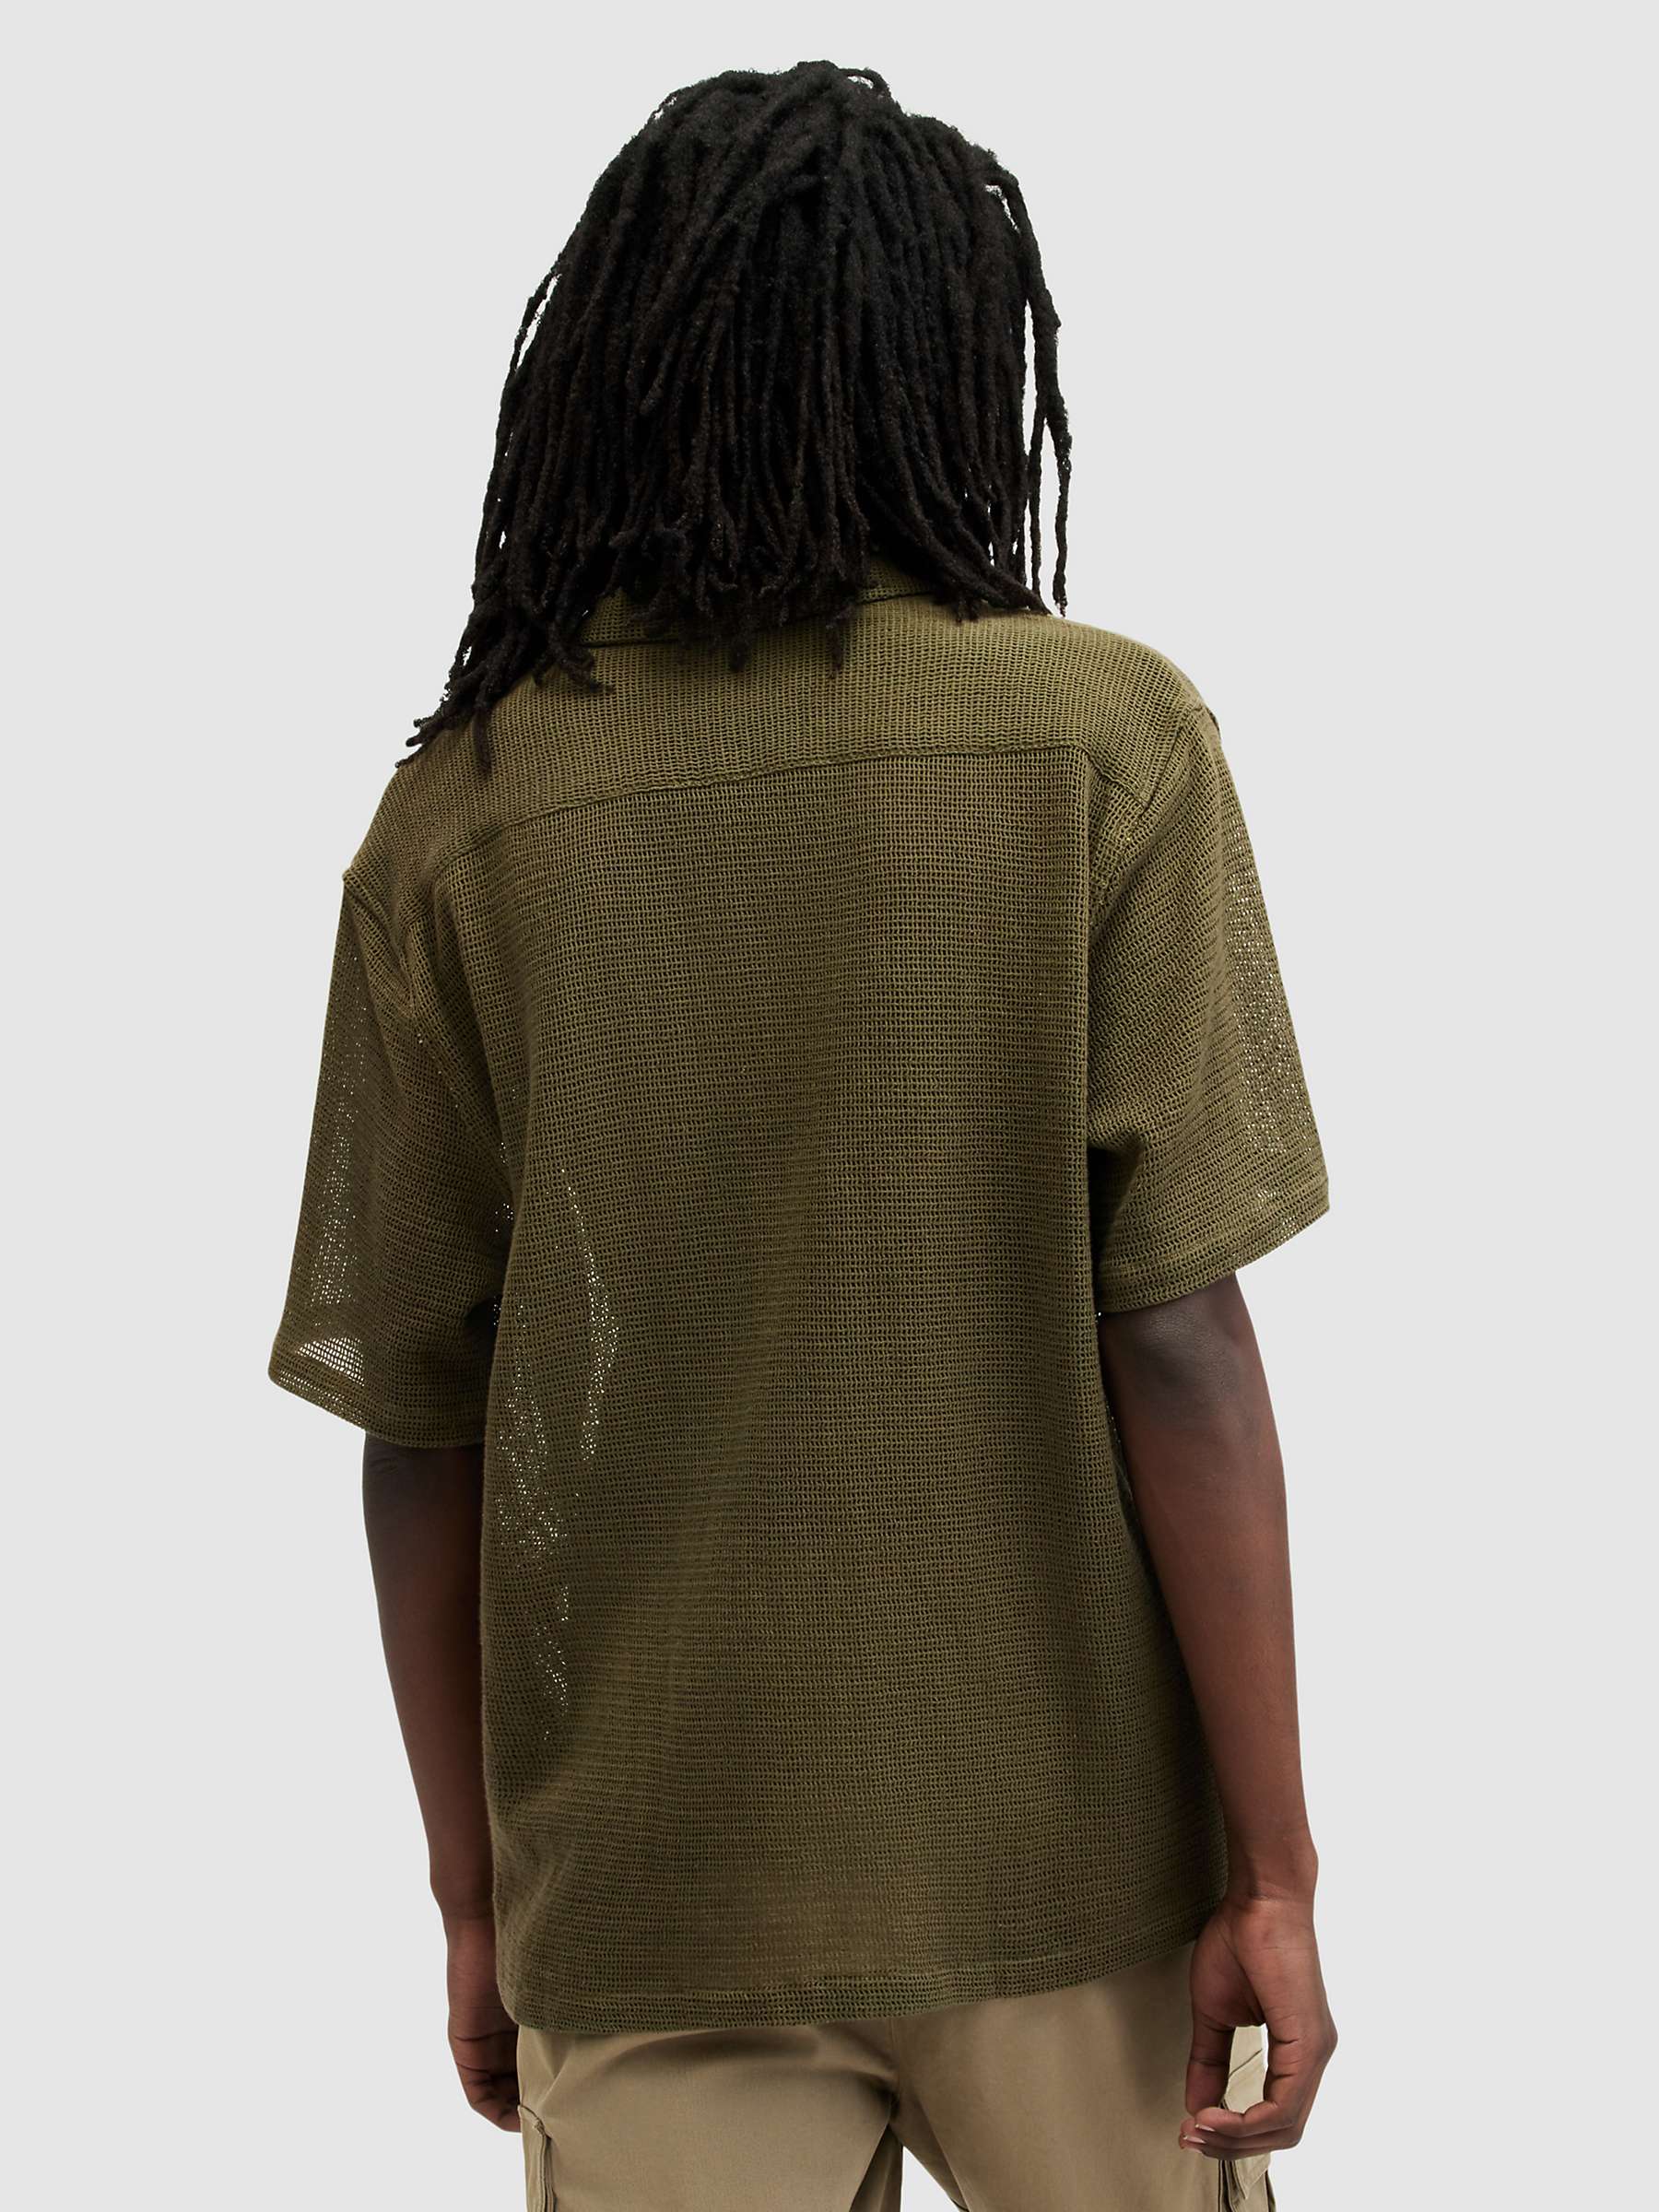 Buy AllSaints Sortie Short Sleeve Shirt Online at johnlewis.com